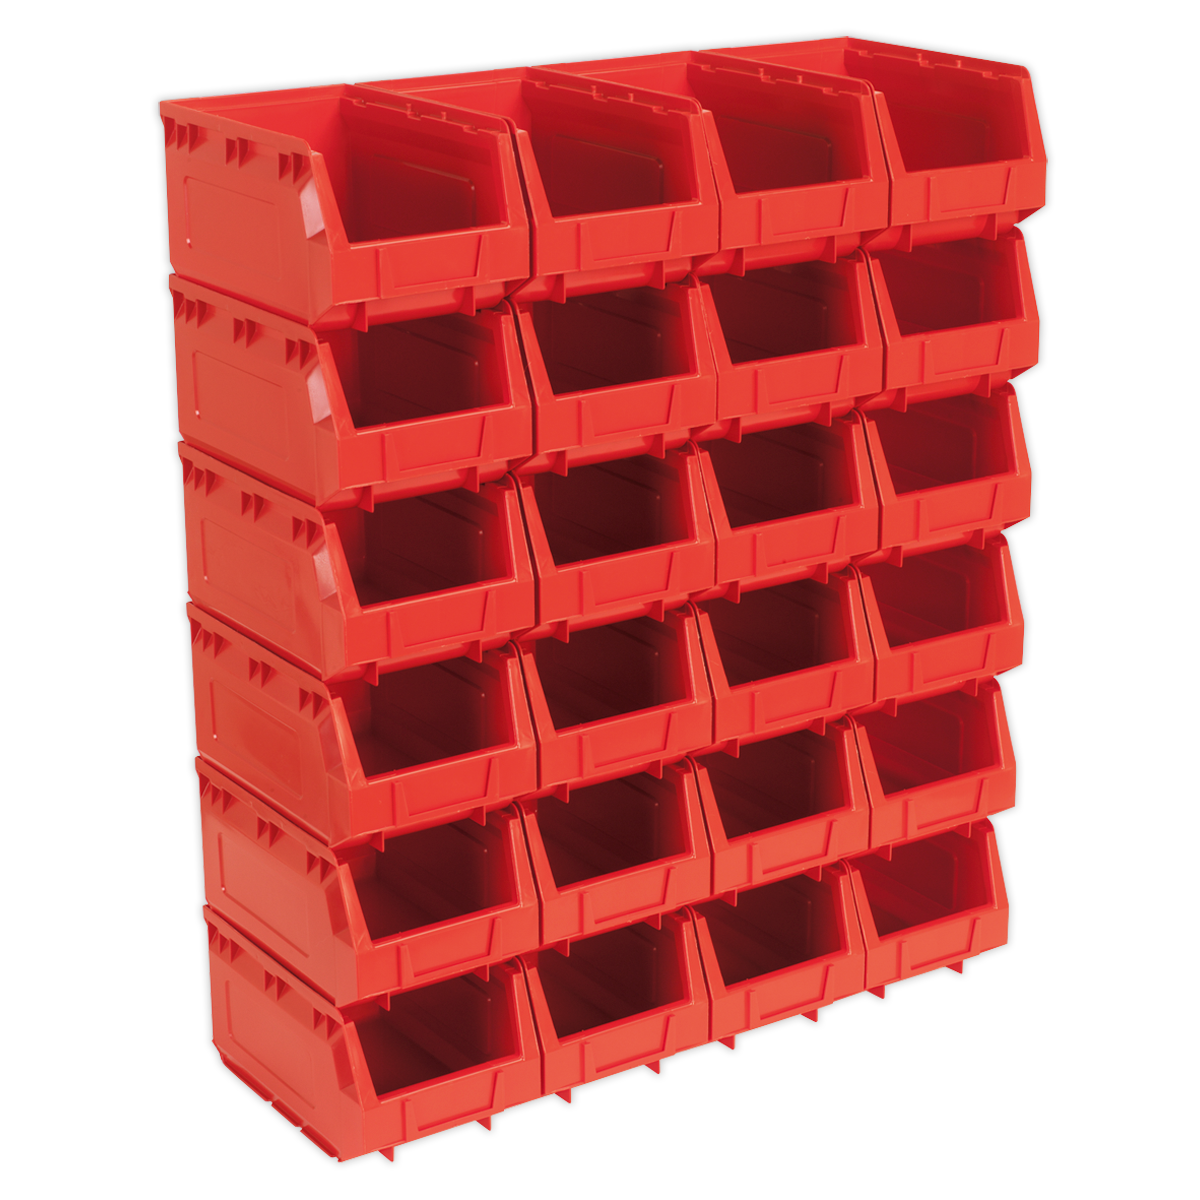 Sealey Plastic Storage Bin 150 x 240 x 130mm - Red Pack of 24